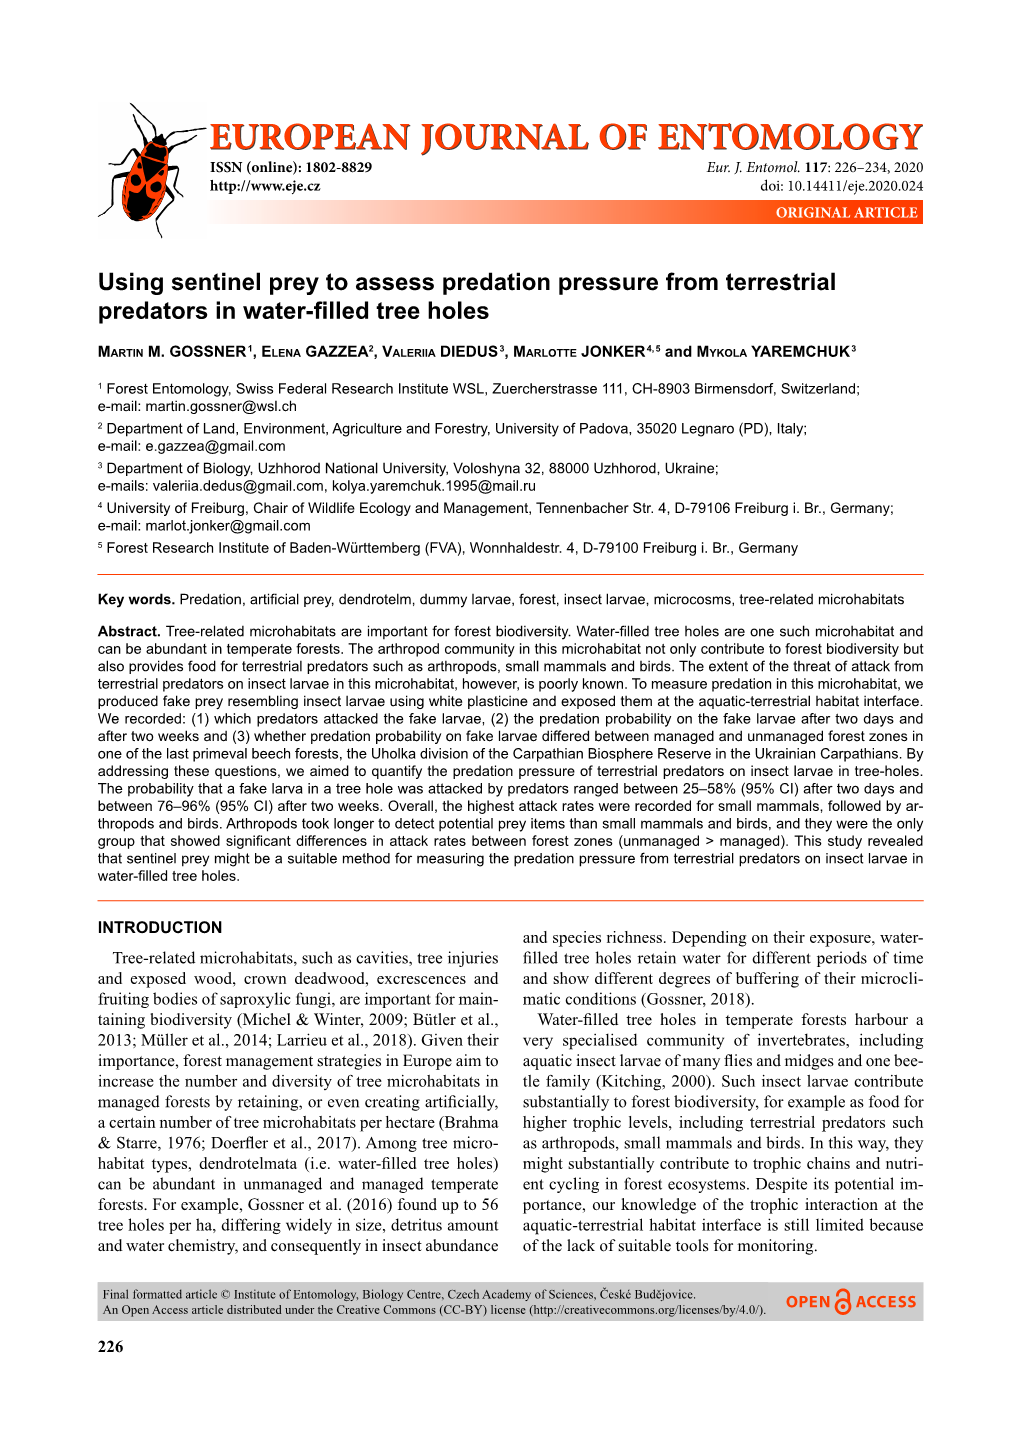 Using Sentinel Prey to Assess Predation Pressure from Terrestrial Predators in Water-ﬁ Lled Tree Holes